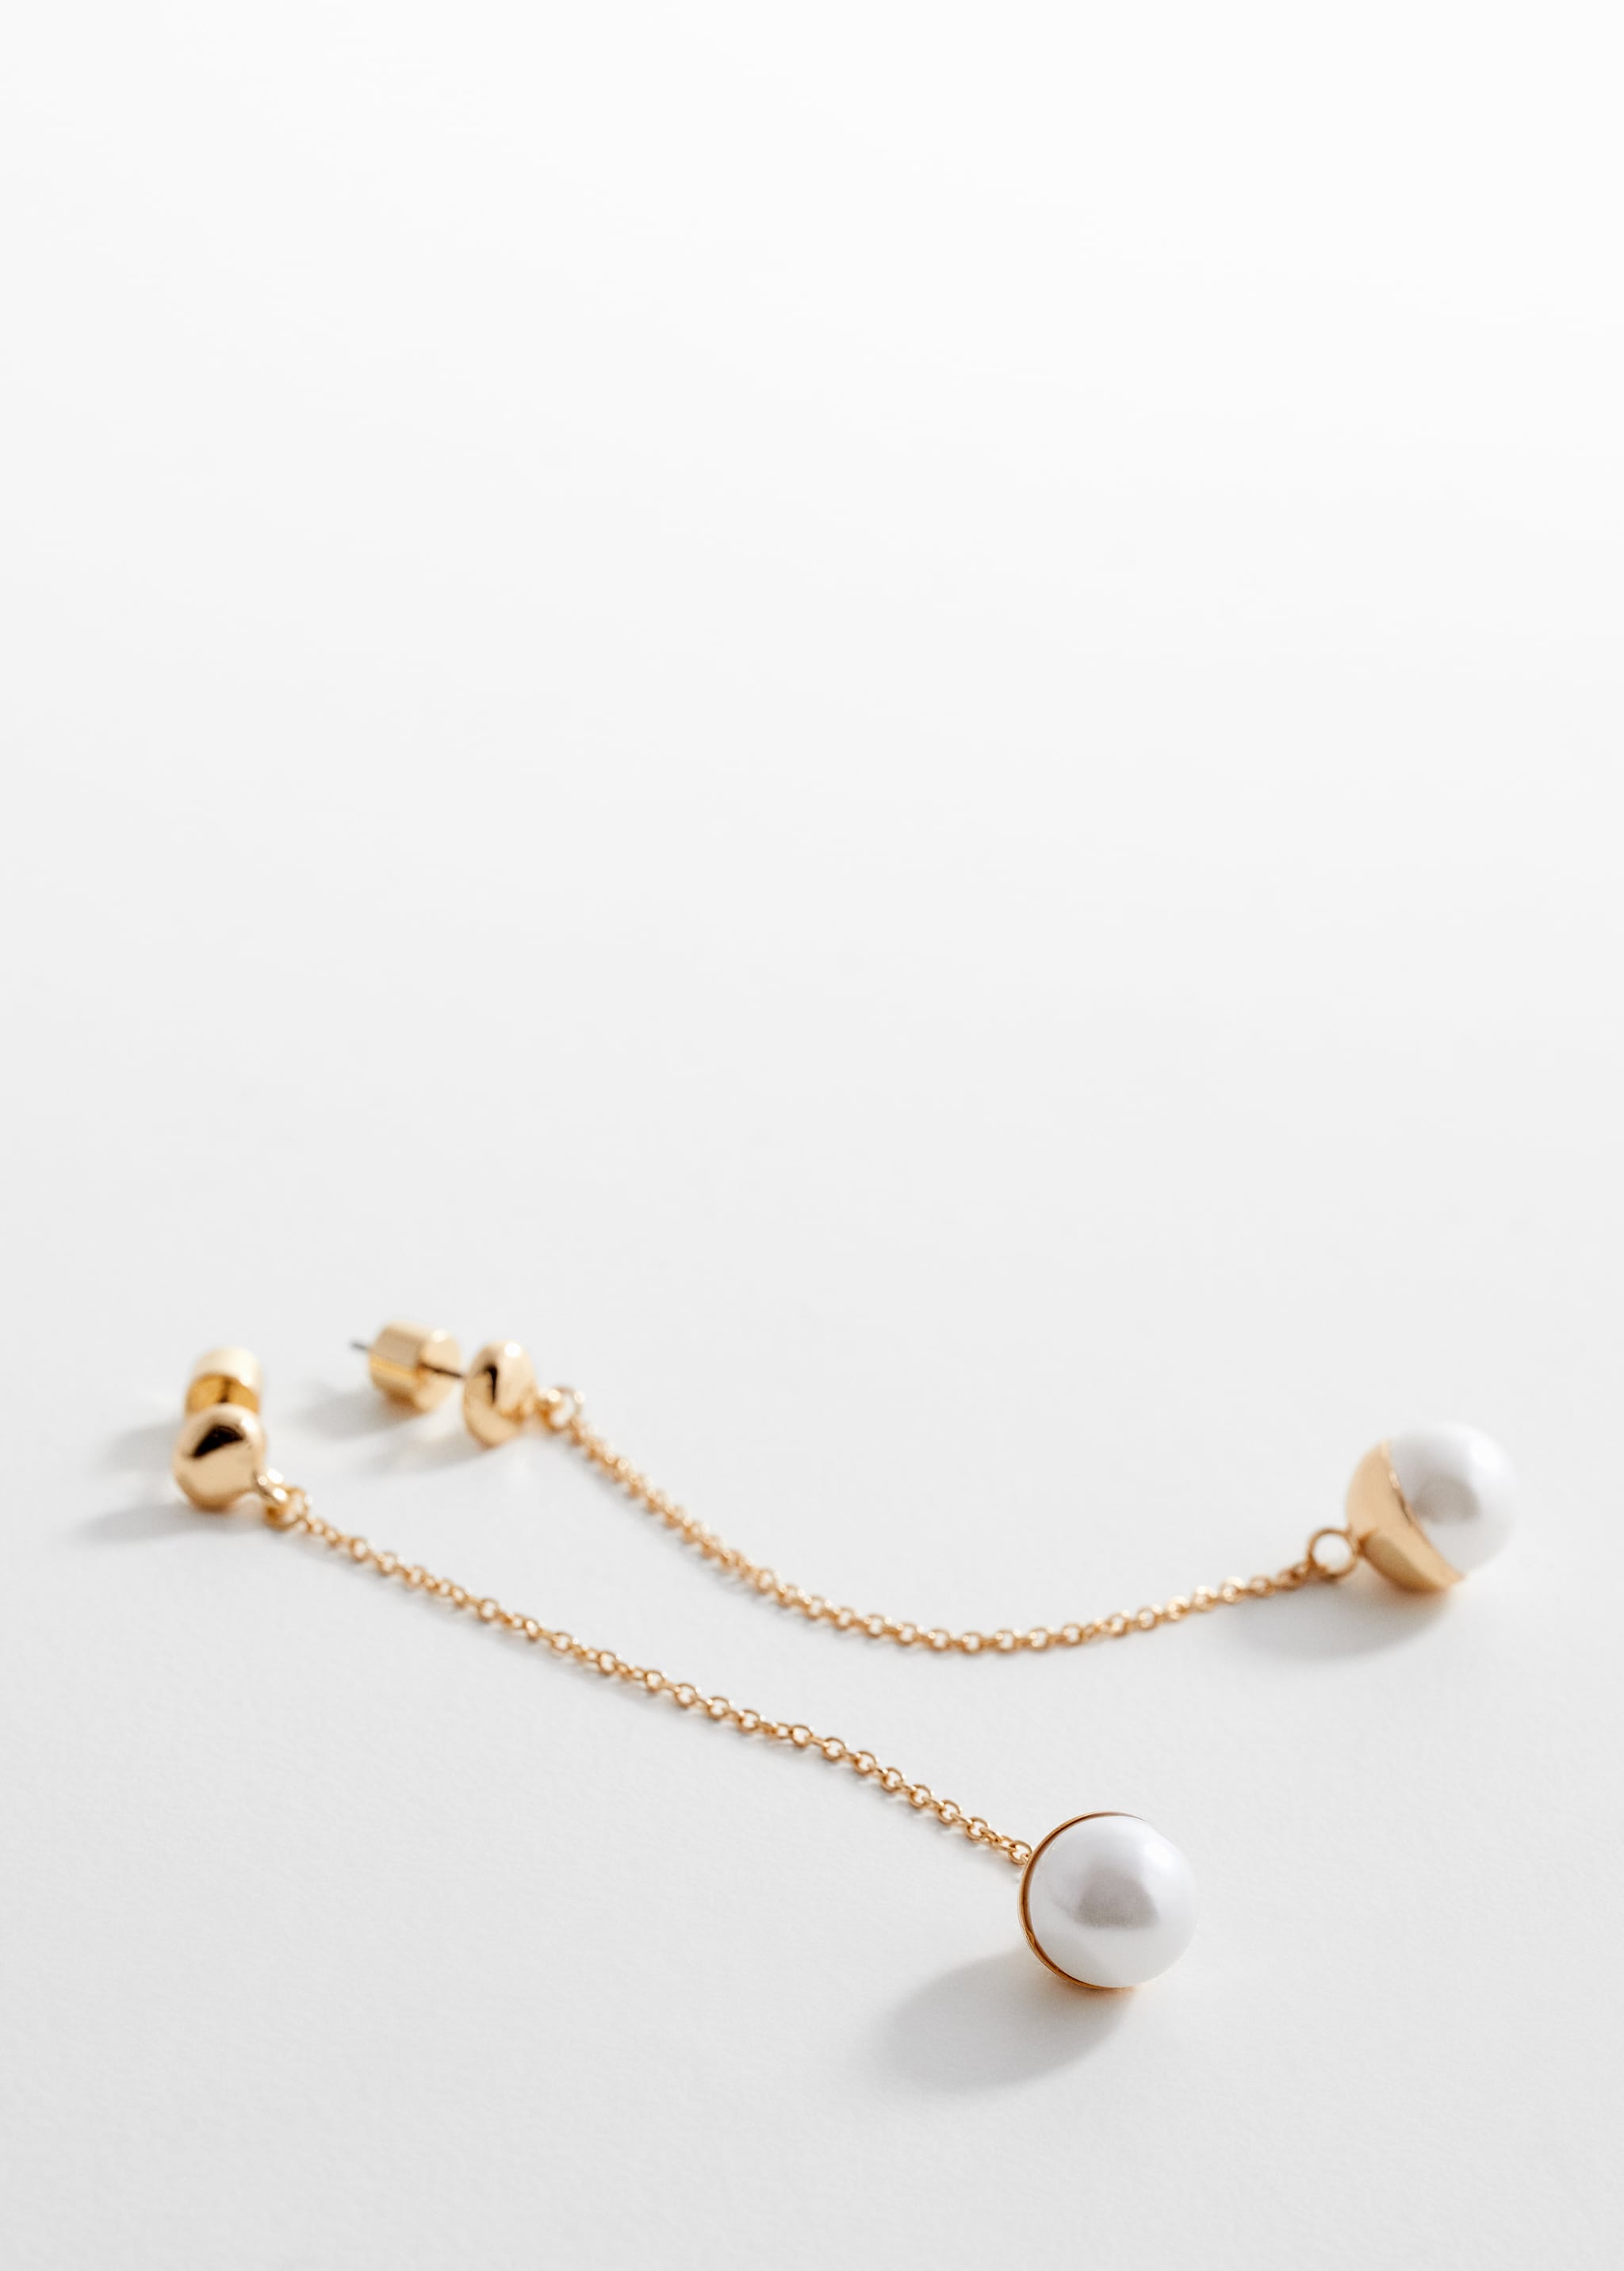 Pearl pendant earrings - Medium plane